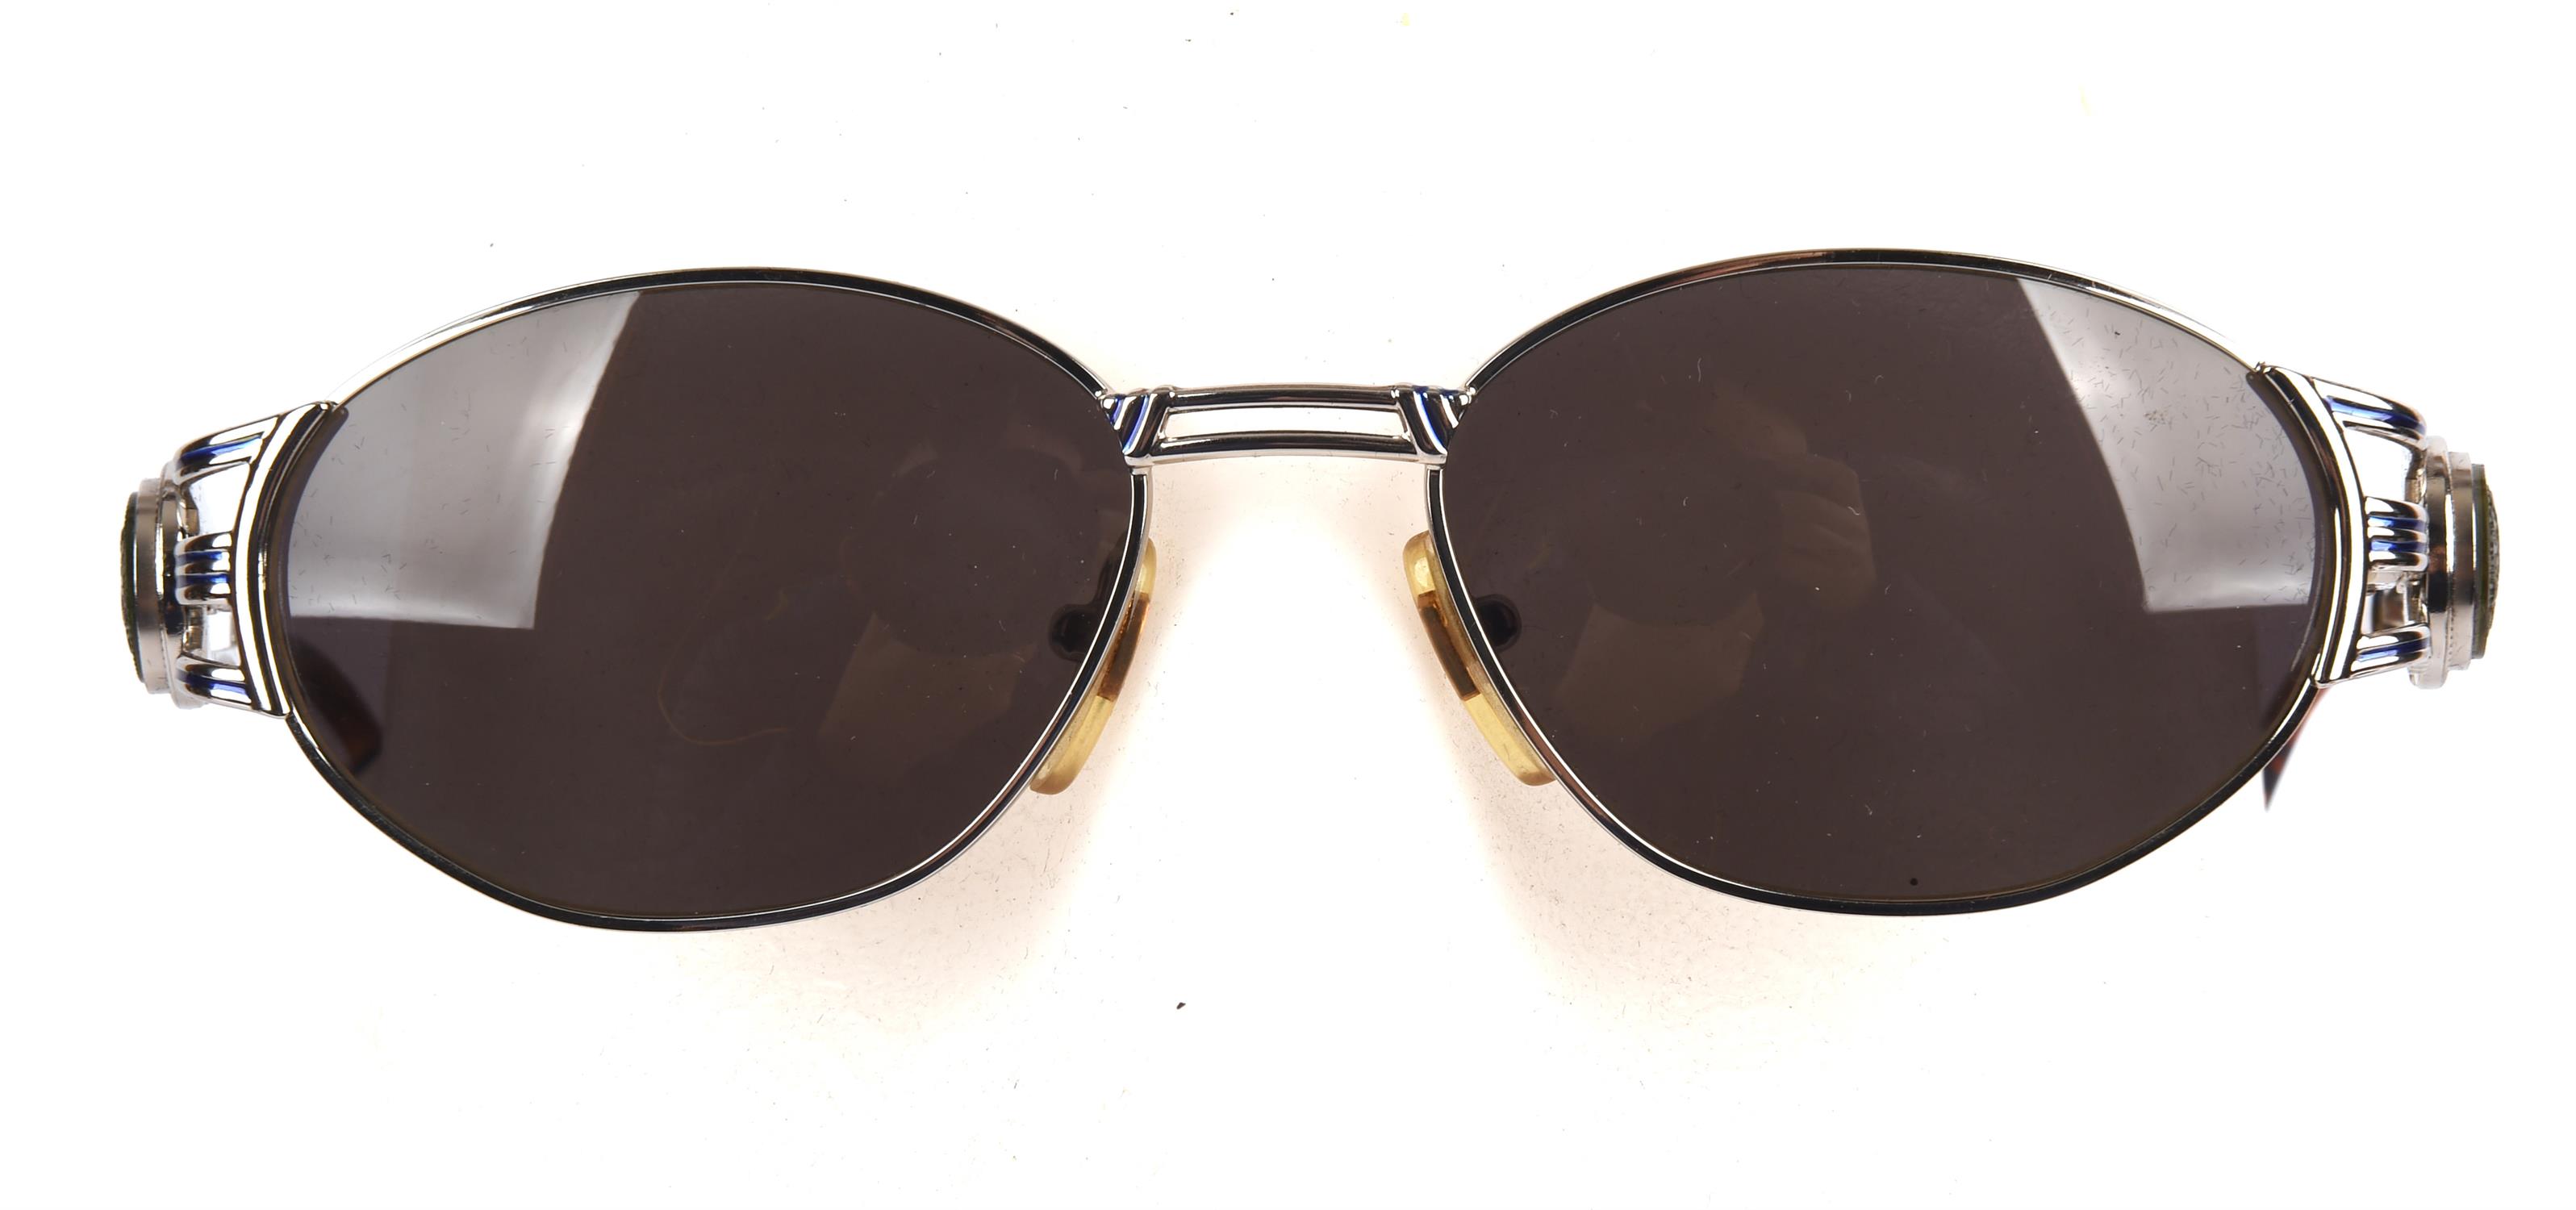 FENDI vintage 1990s ladies sunglasses in soft case with cloth